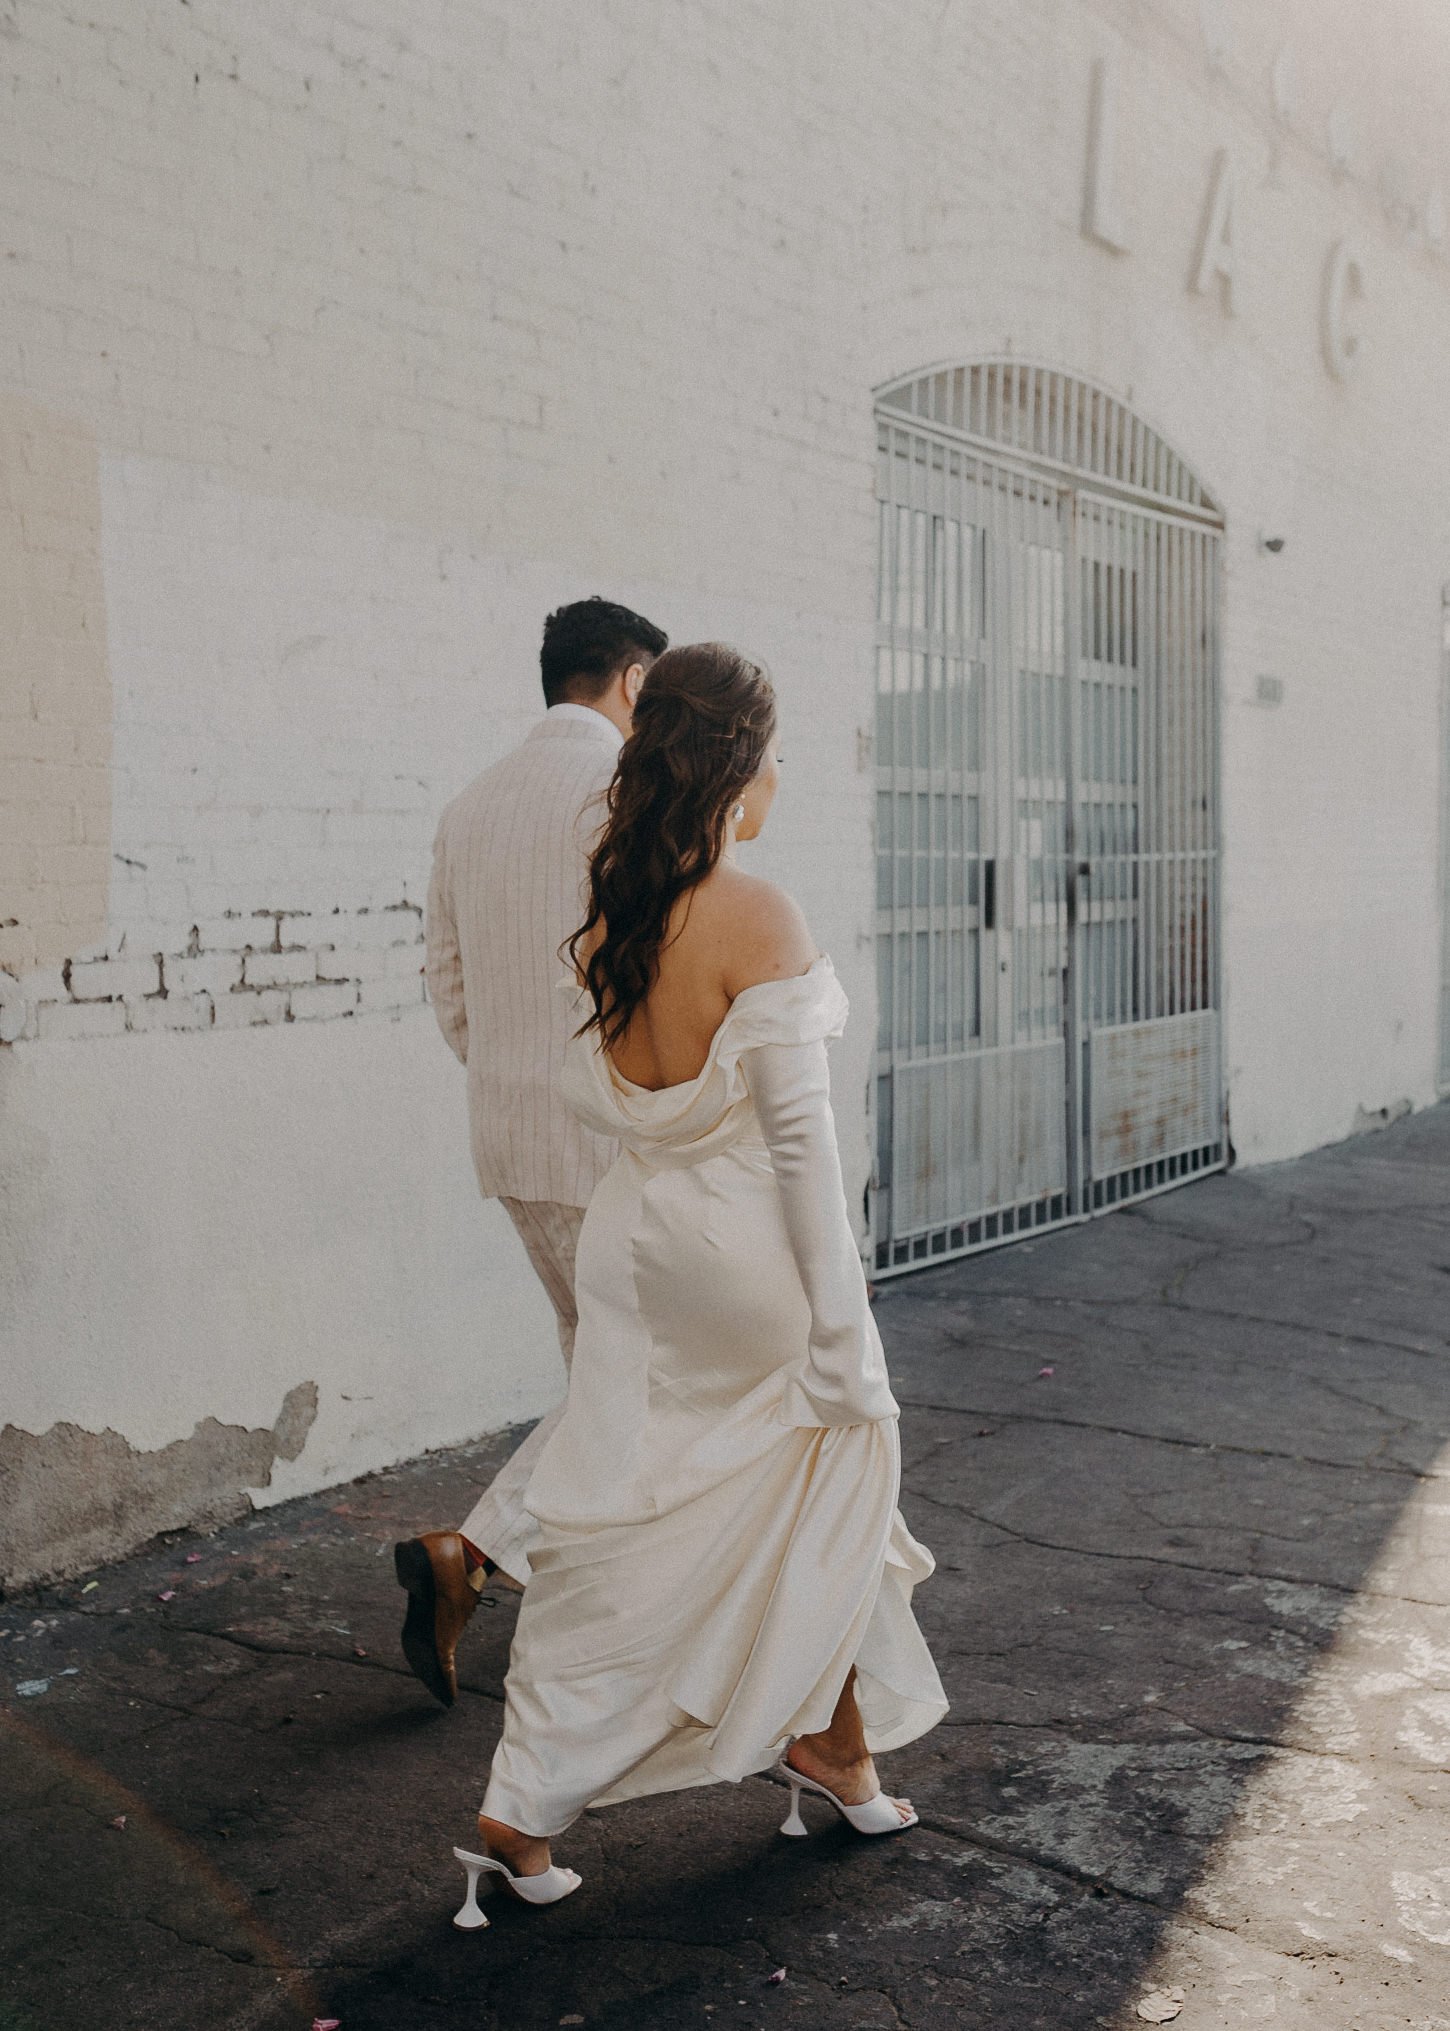 lgbtqia+ wedding photographers in los angeles - city elopement - itlaphoto.com-21.jpg